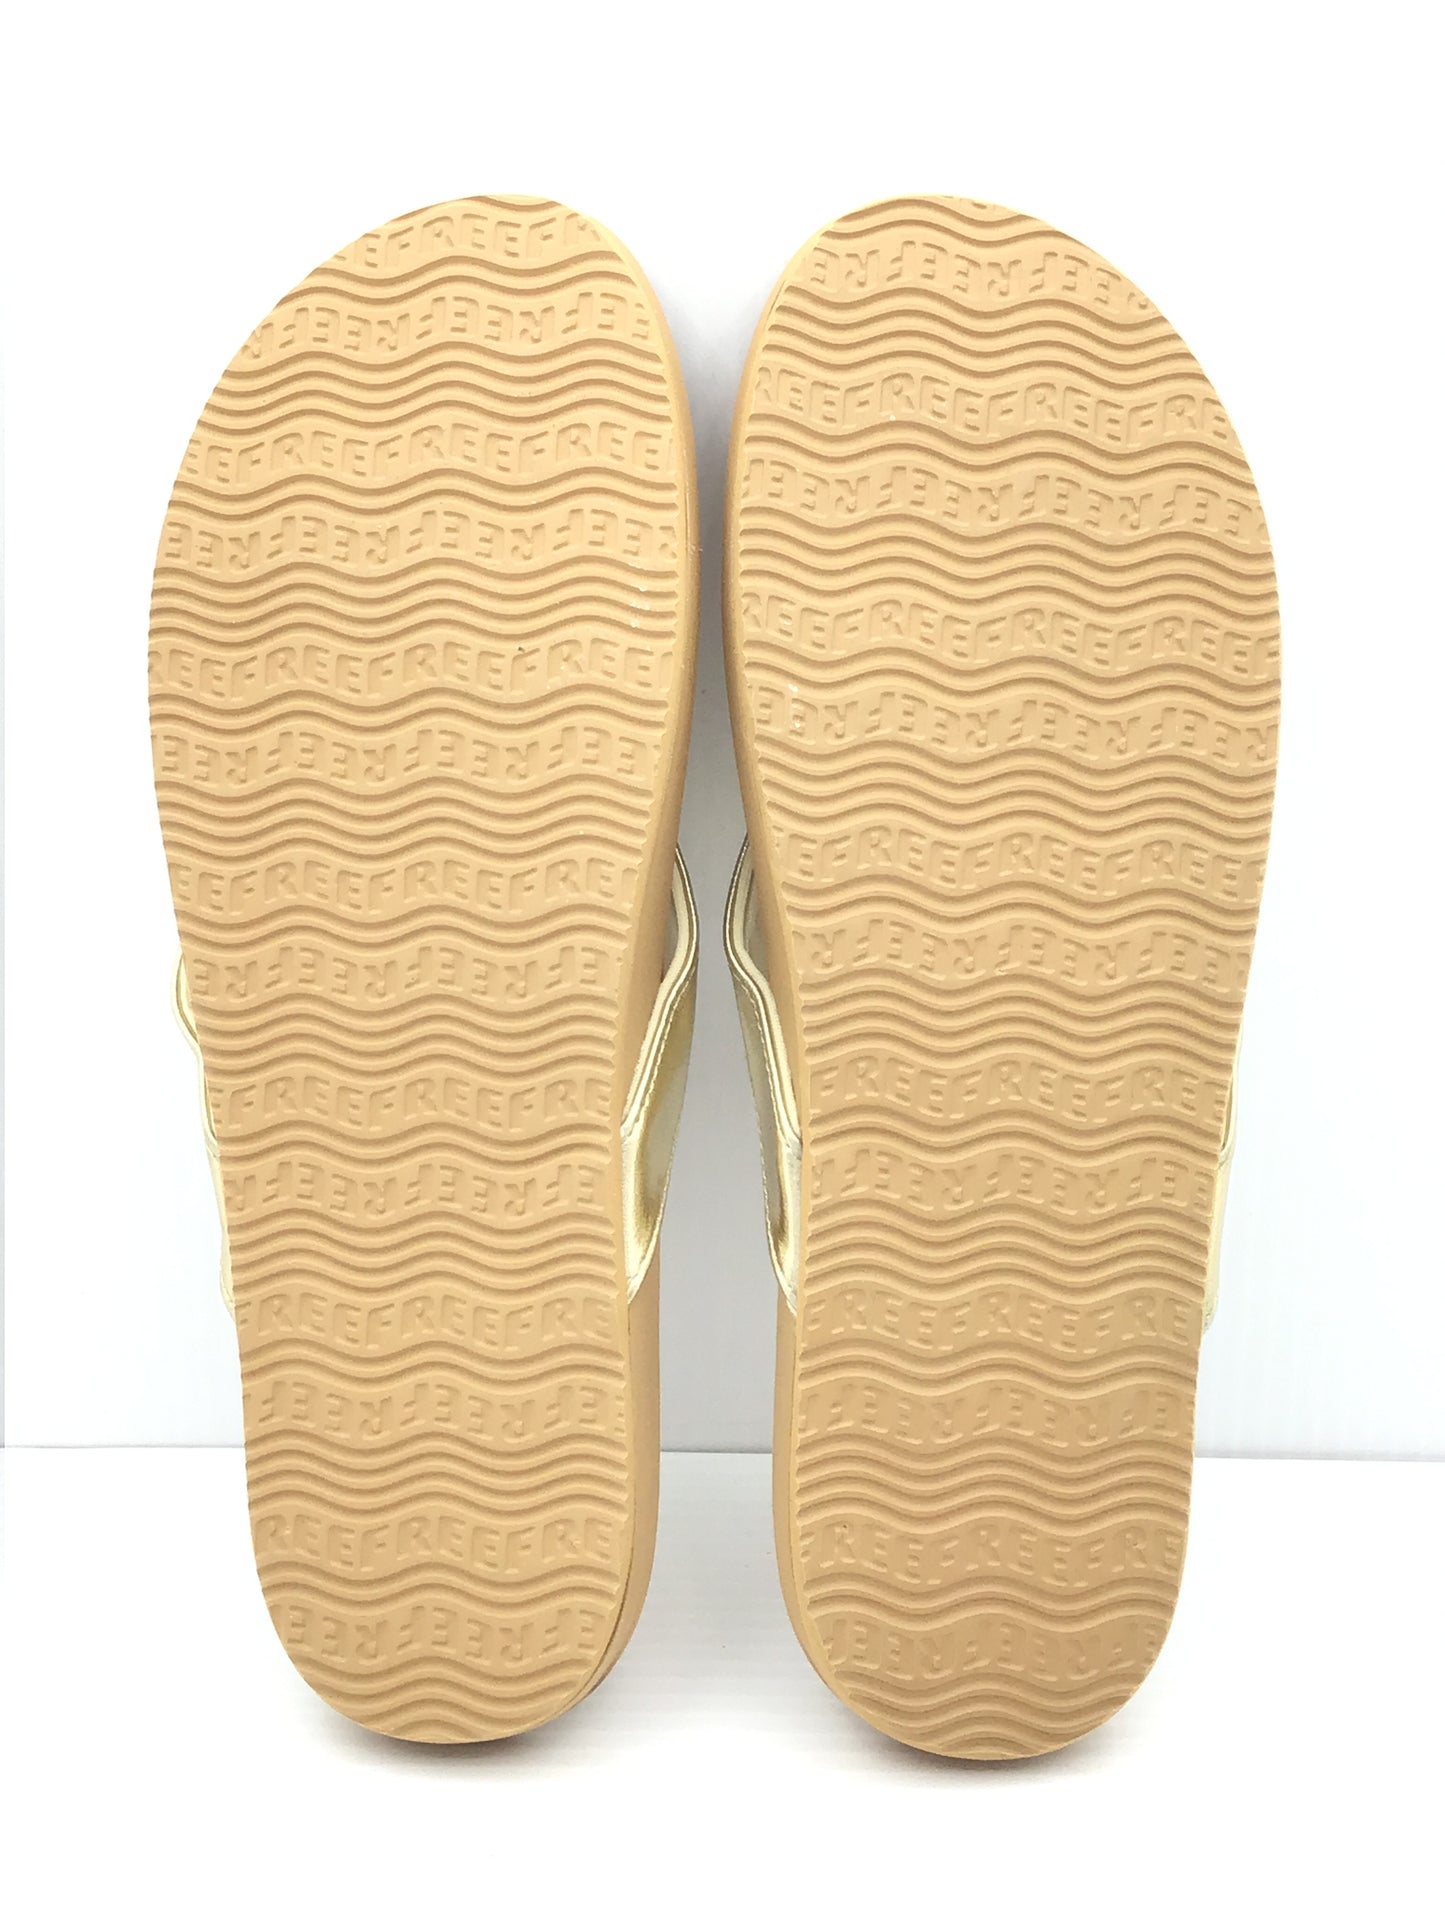 Sandals Flip Flops By Reef  Size: 11